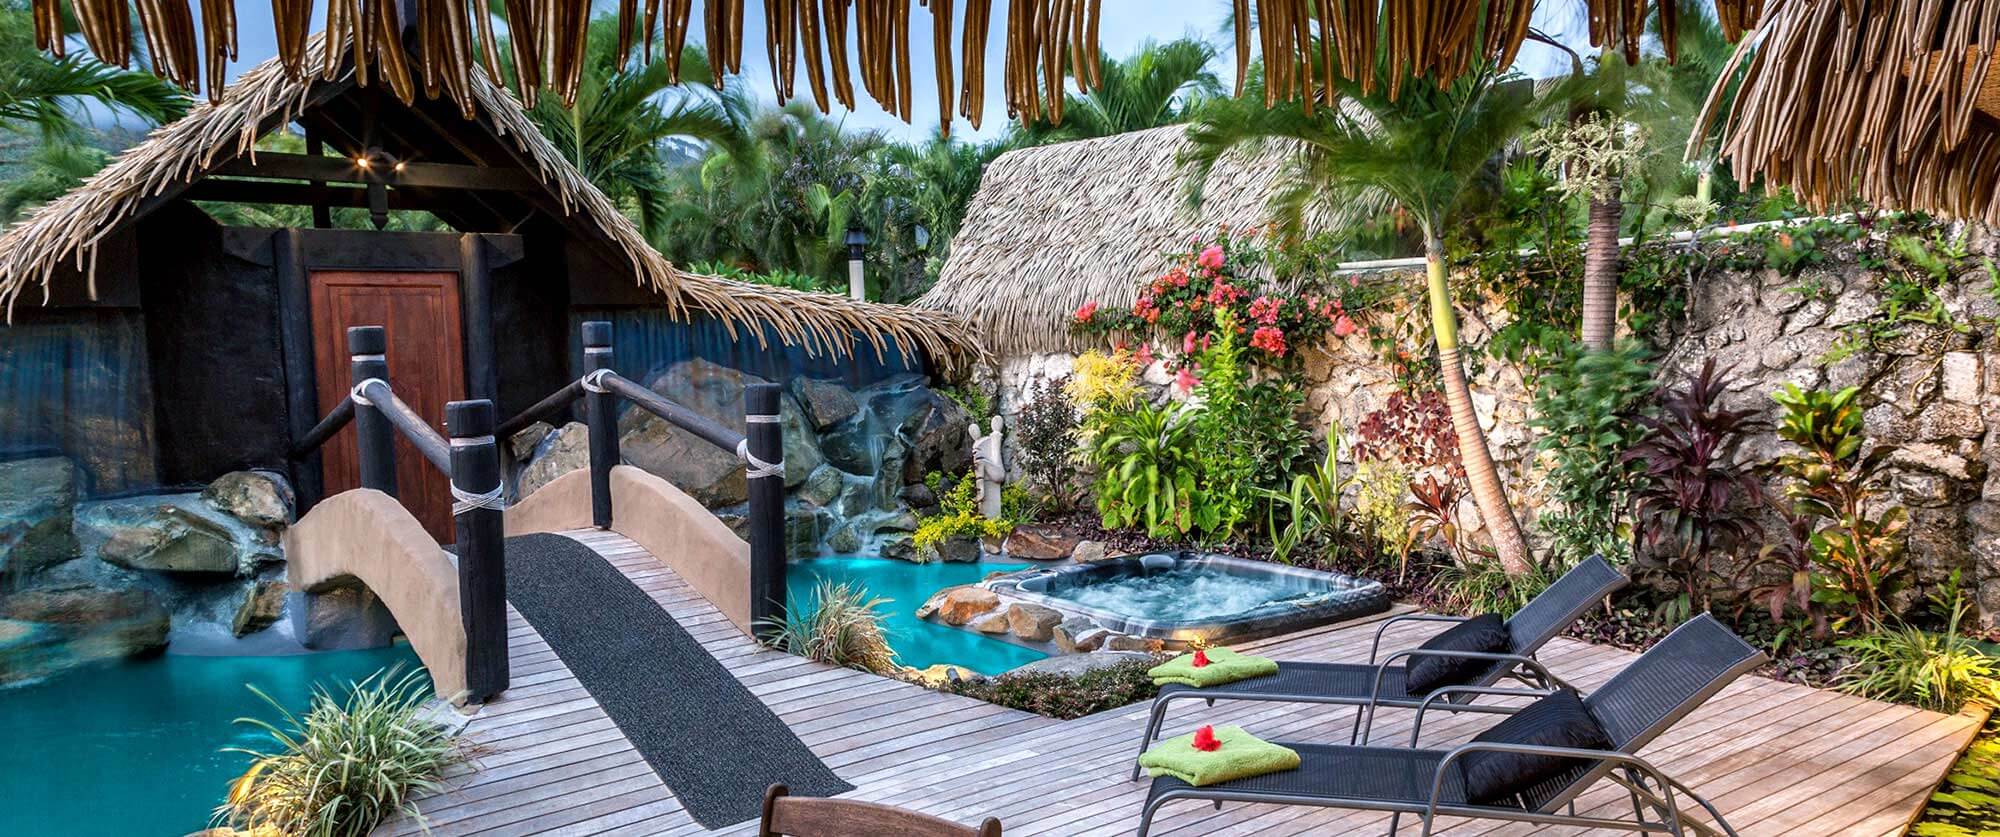 Rumours Rarotonga Resort - Private Pool and Garden - Cook Islands Luxury Beach Villas